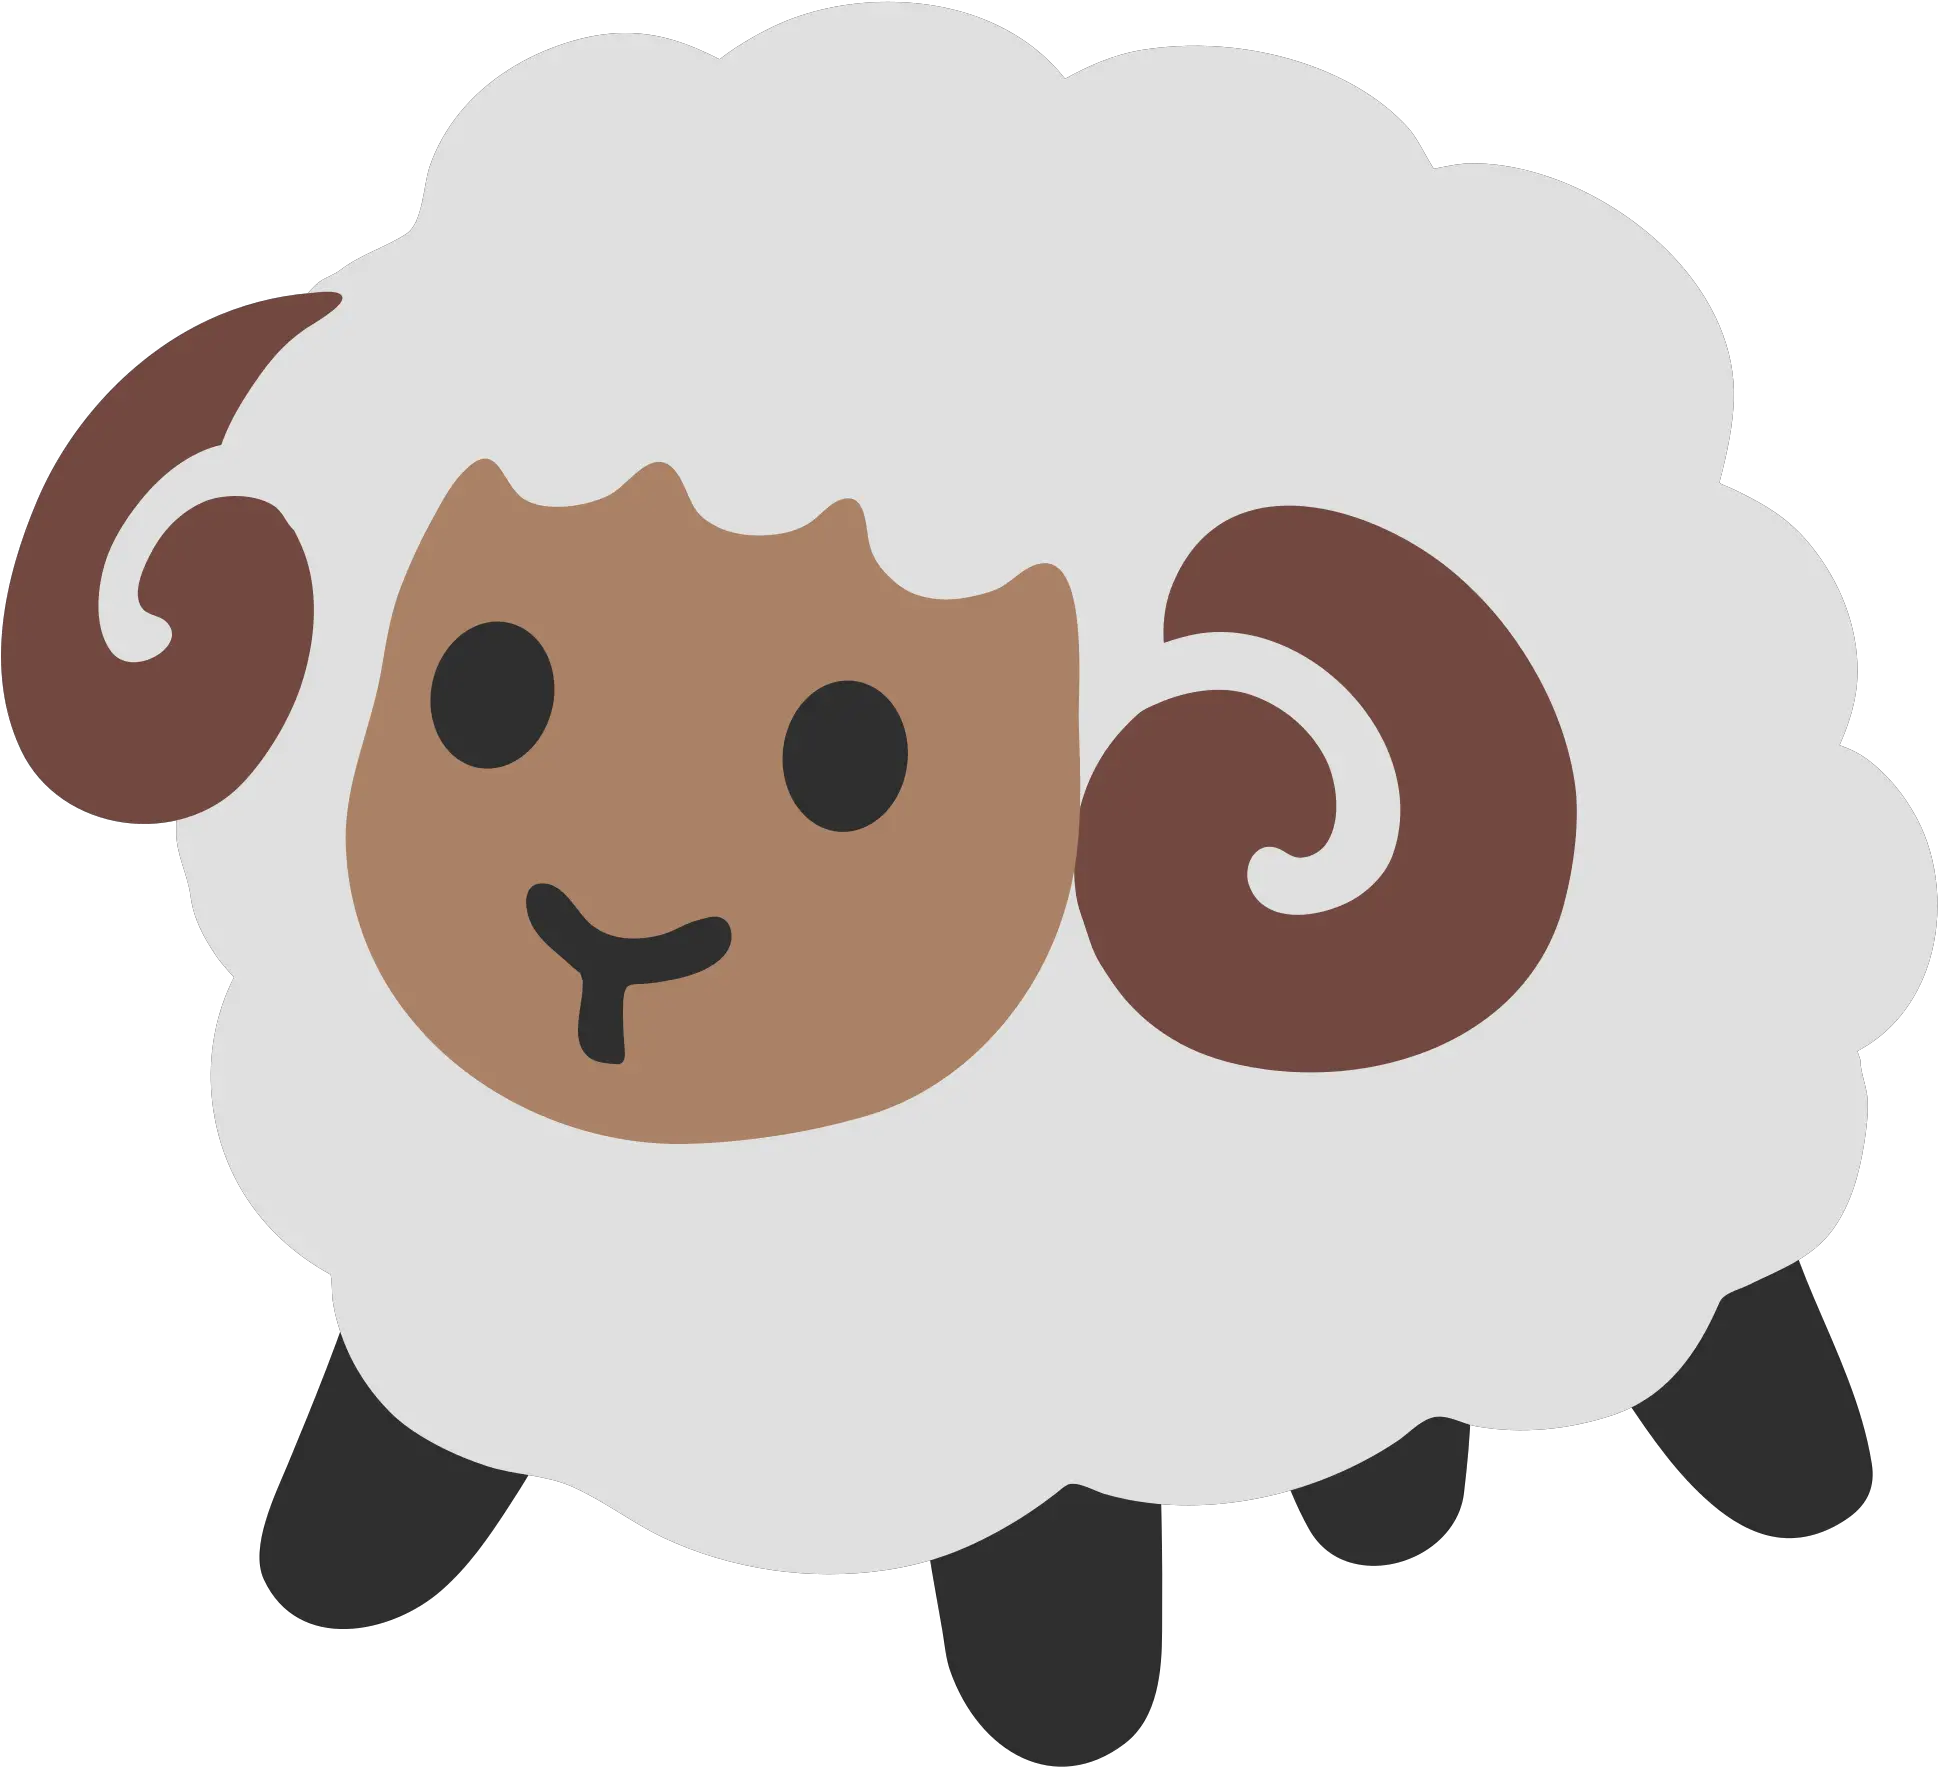 Fileemoji U1f40fsvg Wikimedia Commons Sheep Emoji Png Sheep Png